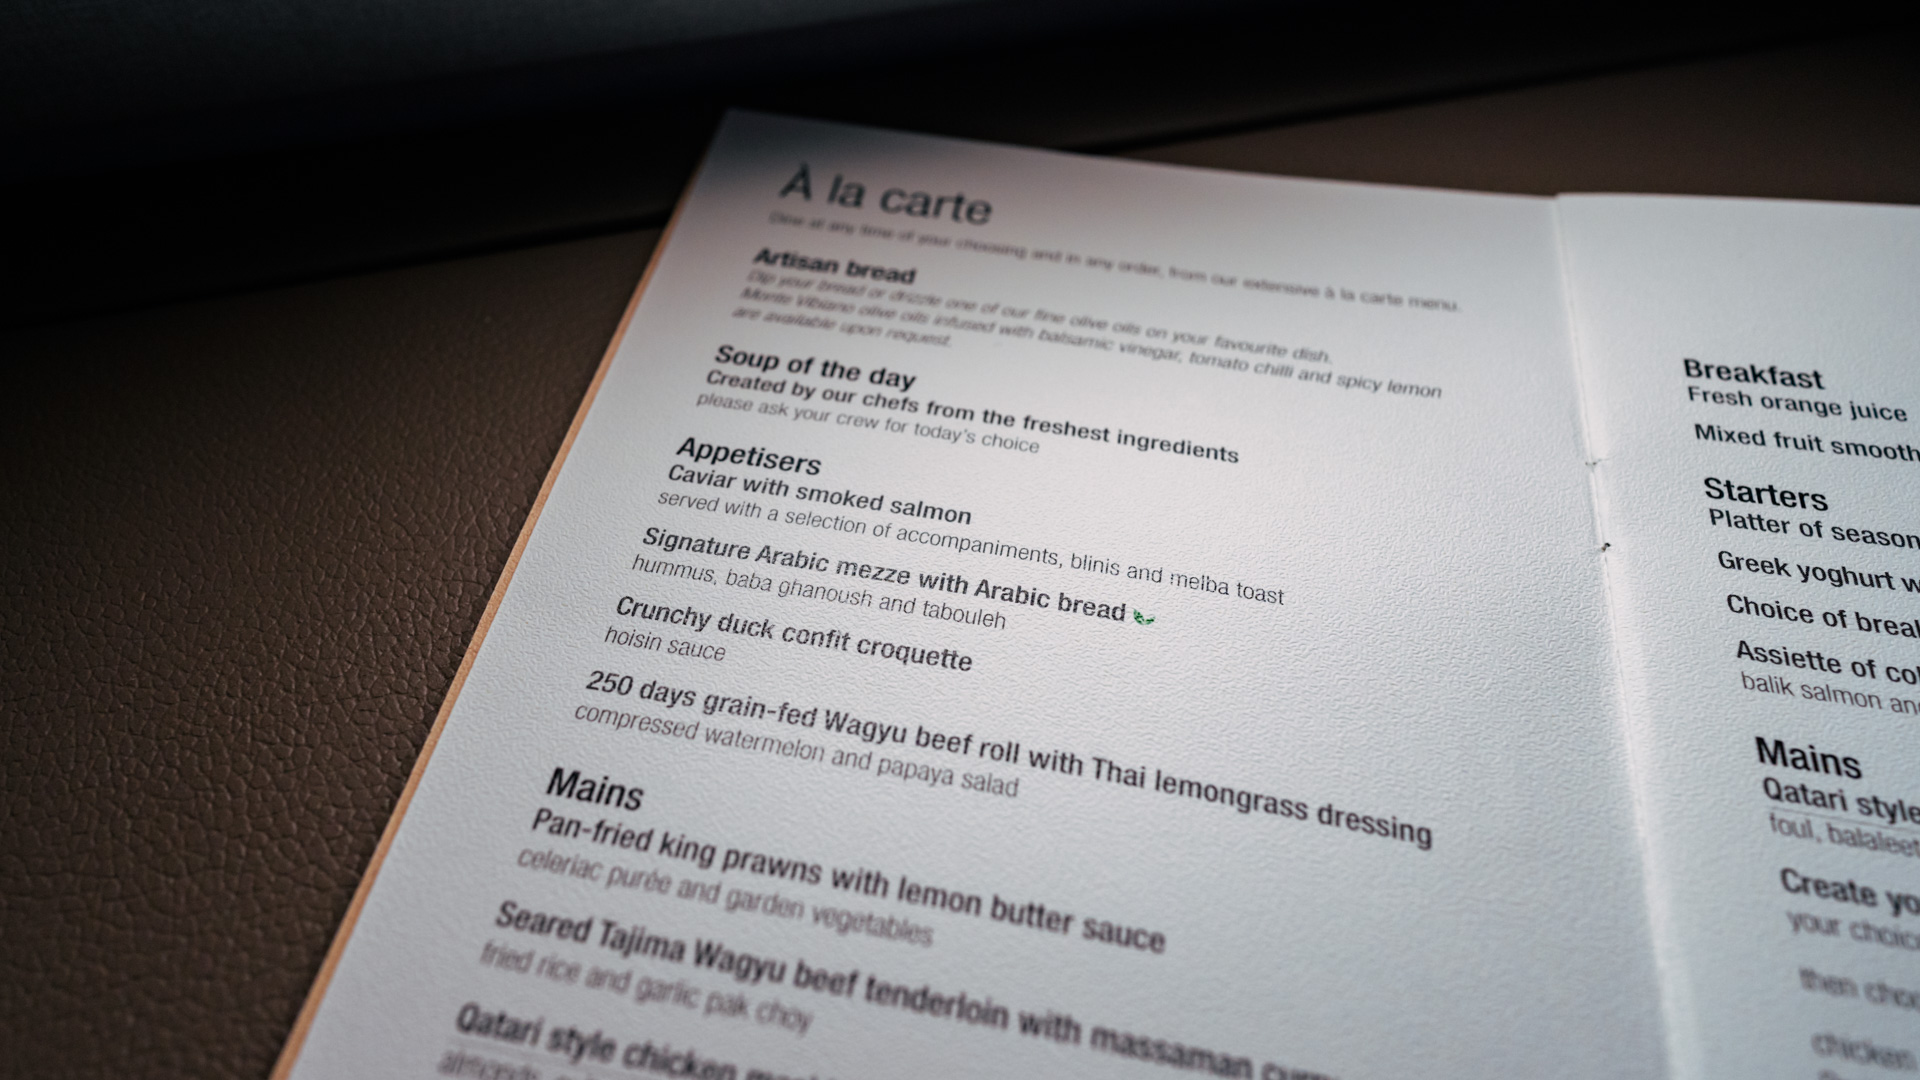 Qatar Airways A380 First Class menu appetisers